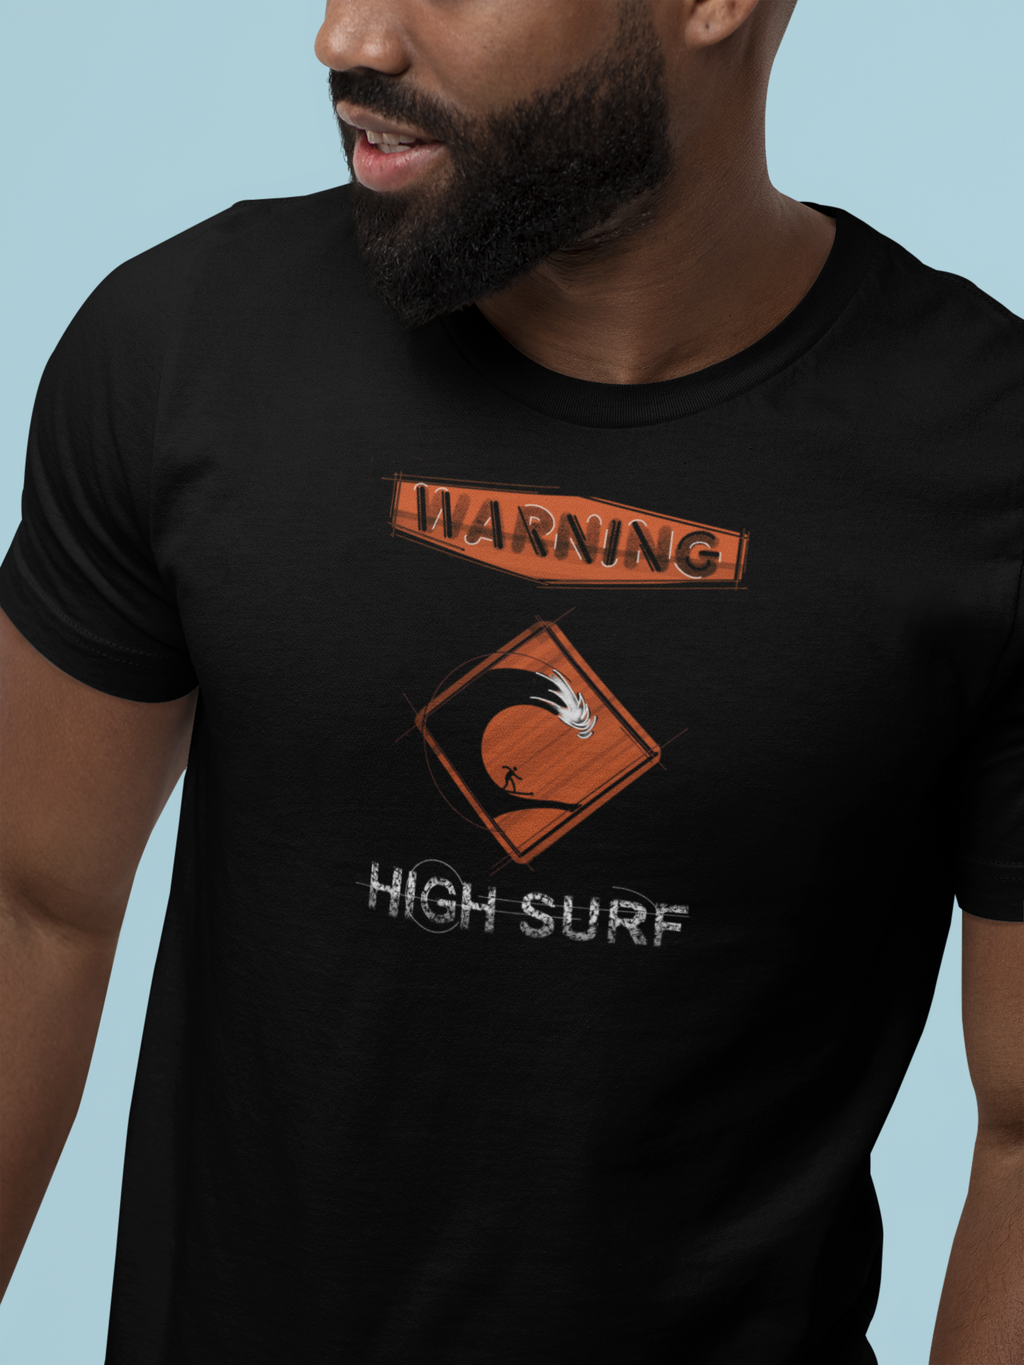 Warning High Surf | T-shirt